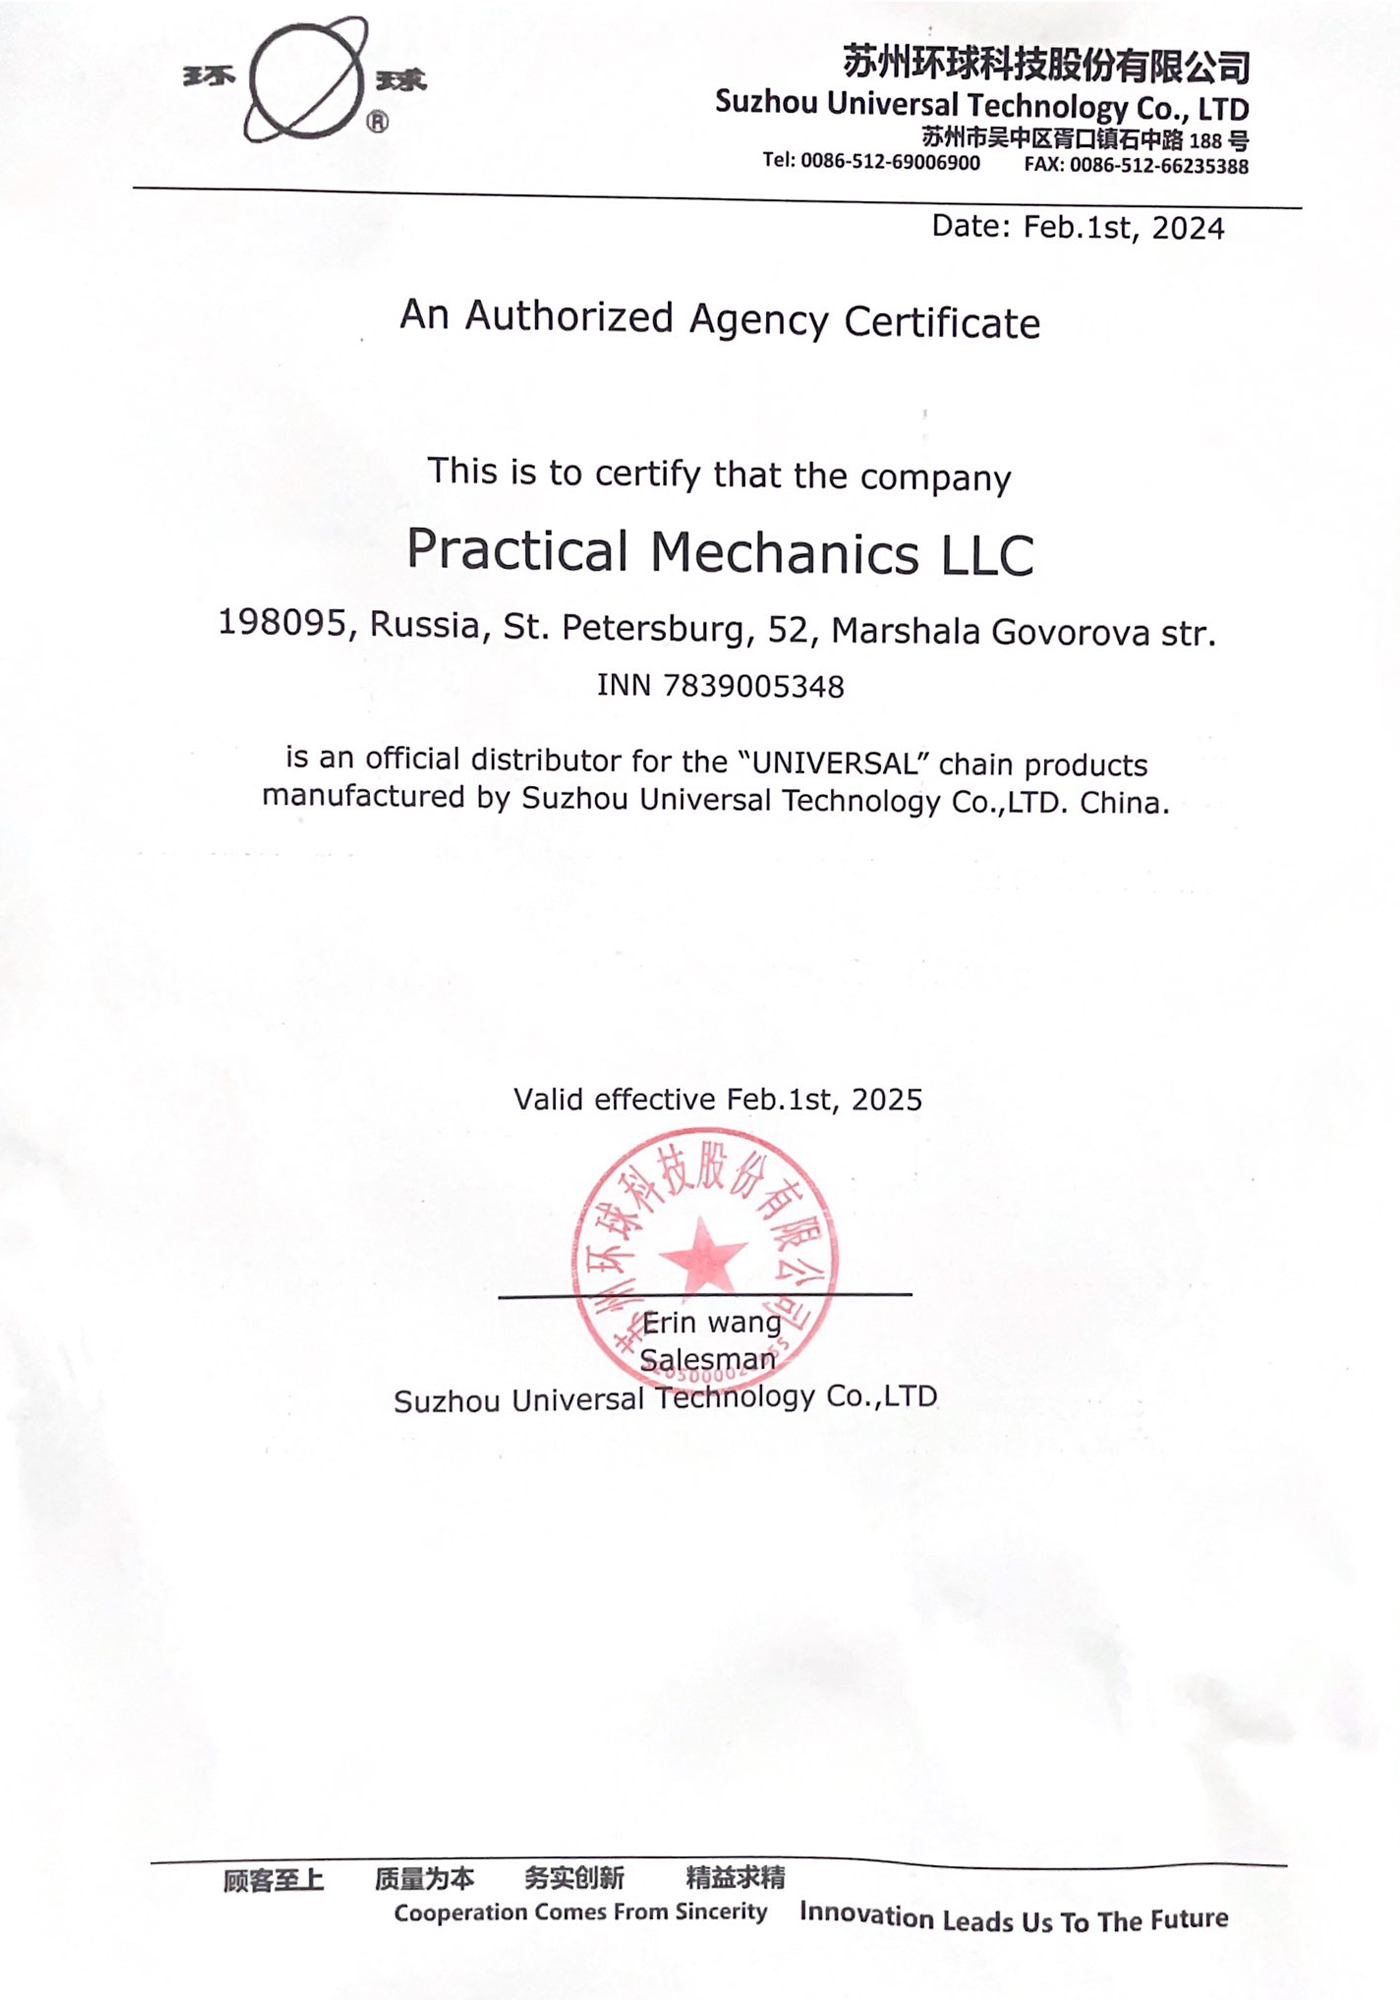 Сертификат Universal